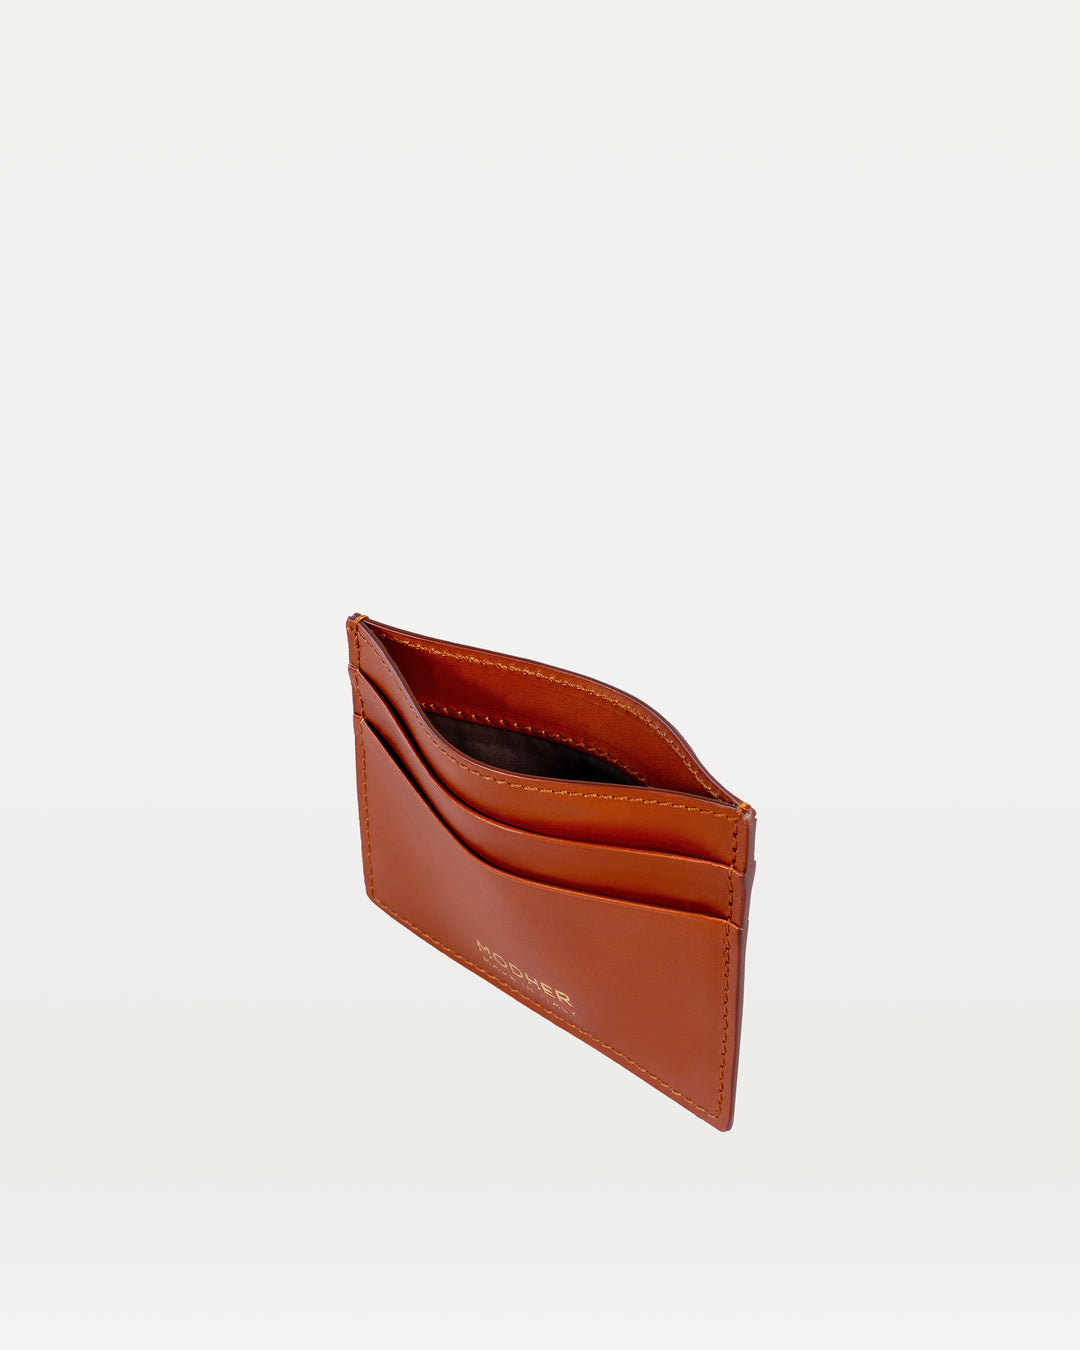 MODHER Leather Credit Card Slip#color_golden-brown